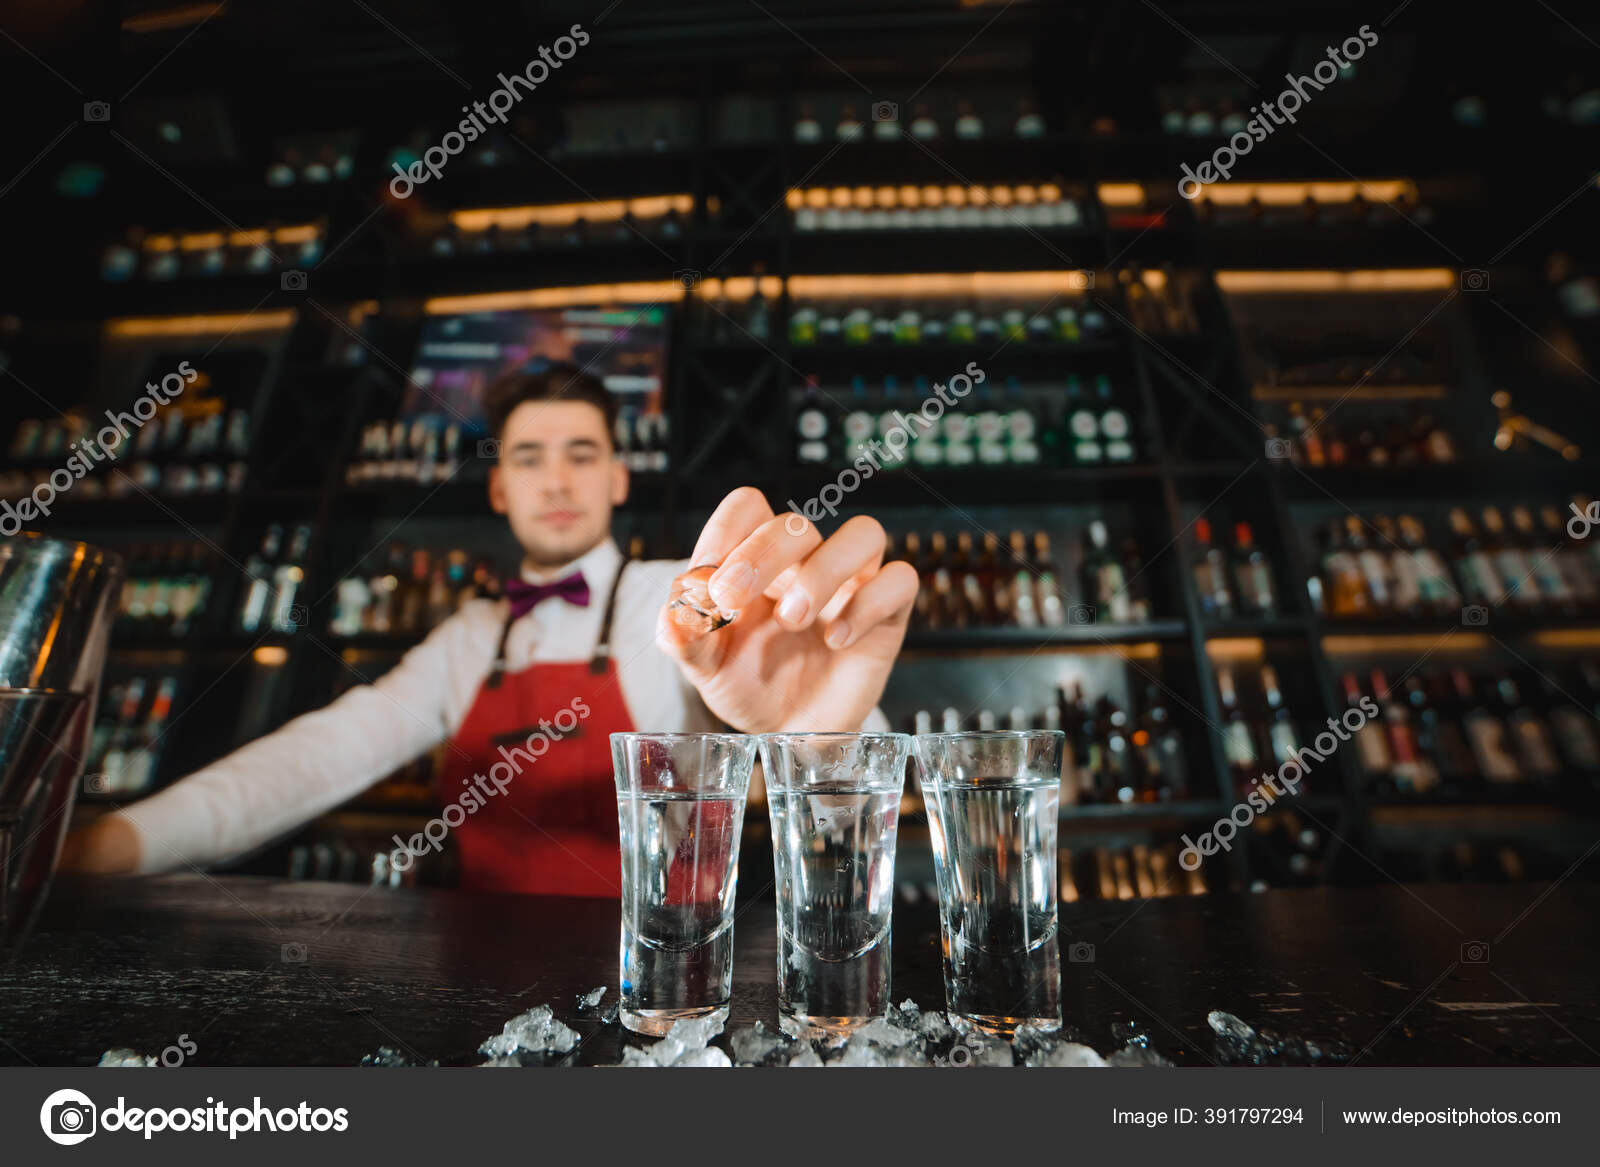 https://st4.depositphotos.com/13768208/39179/i/1600/depositphotos_391797294-stock-photo-american-bartender-calling-order-night.jpg